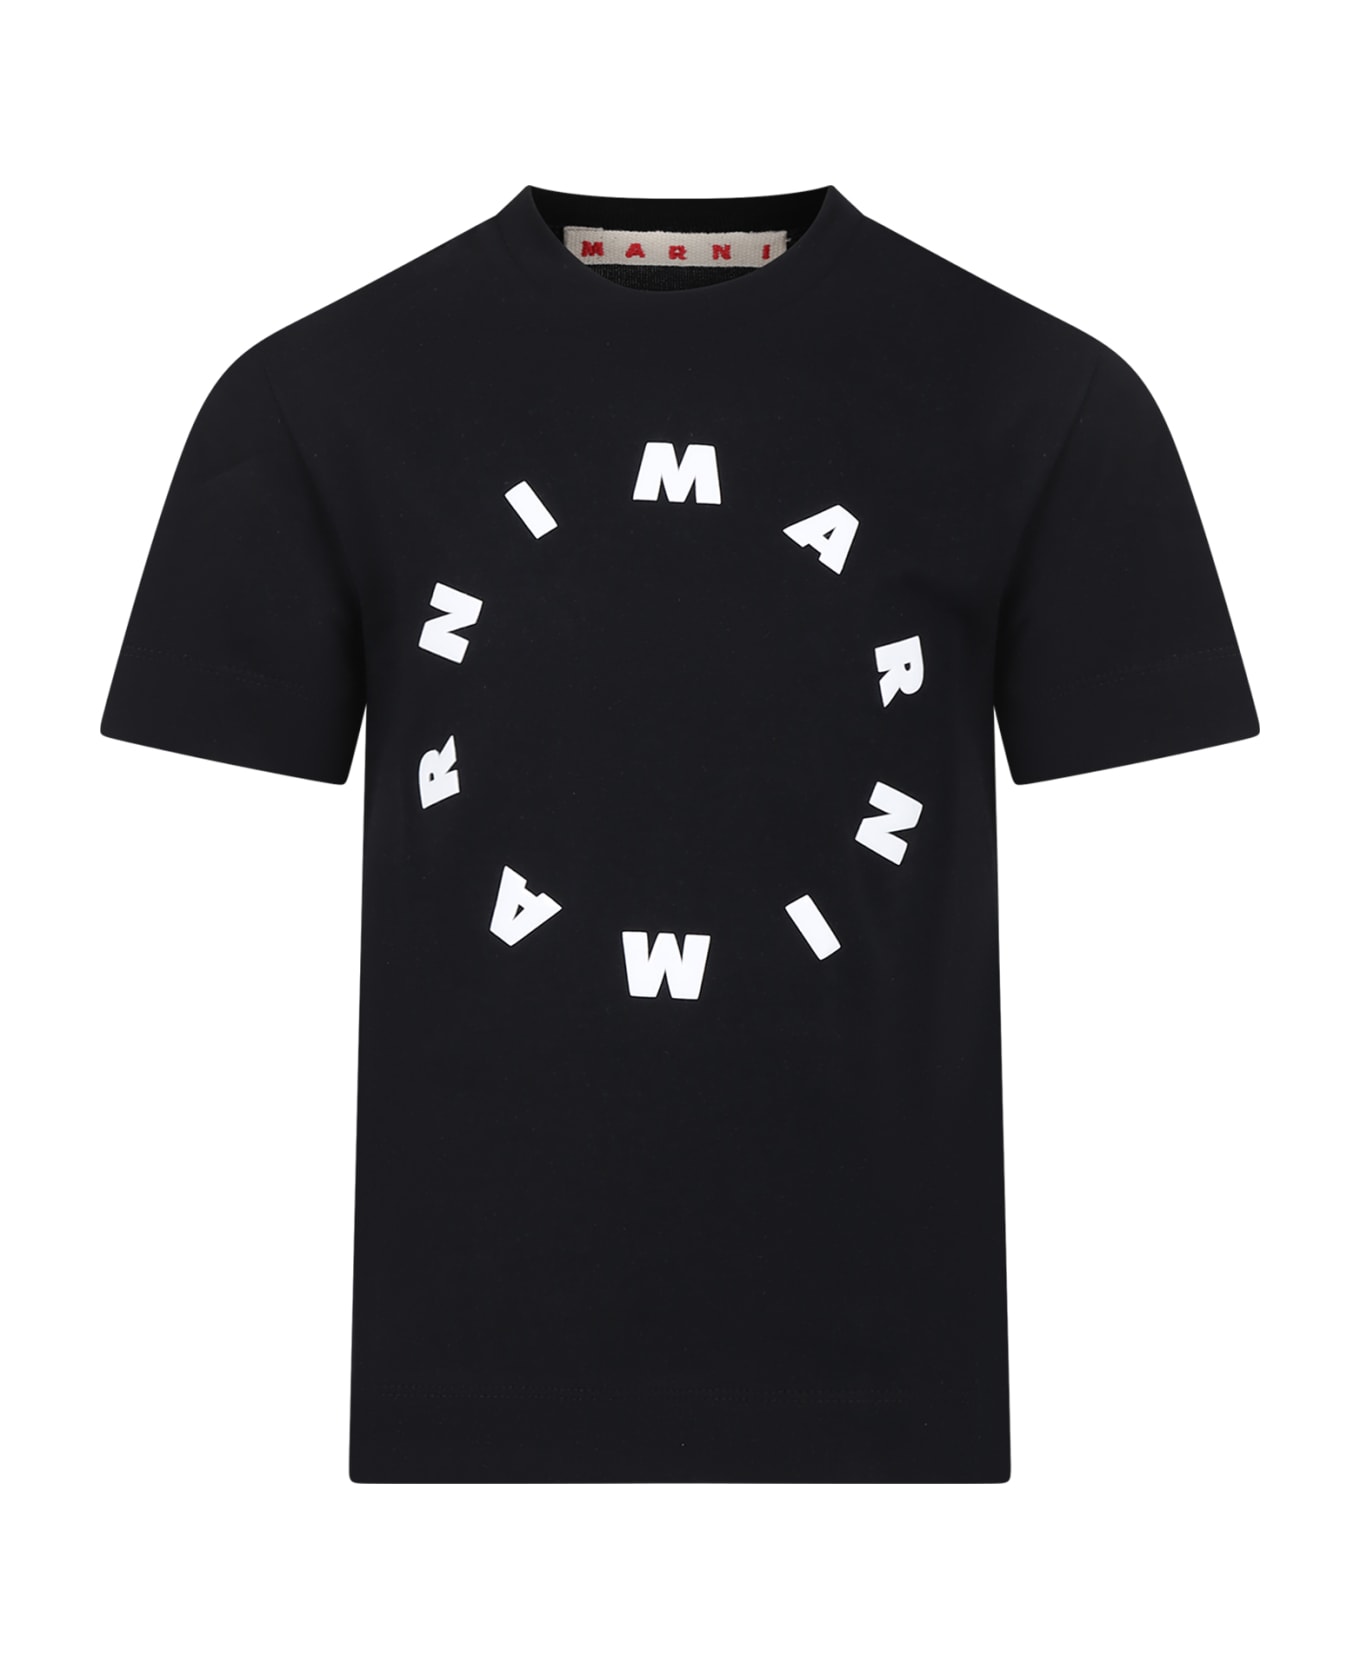 Marni Black T-shirt For Kids With Logo - Black